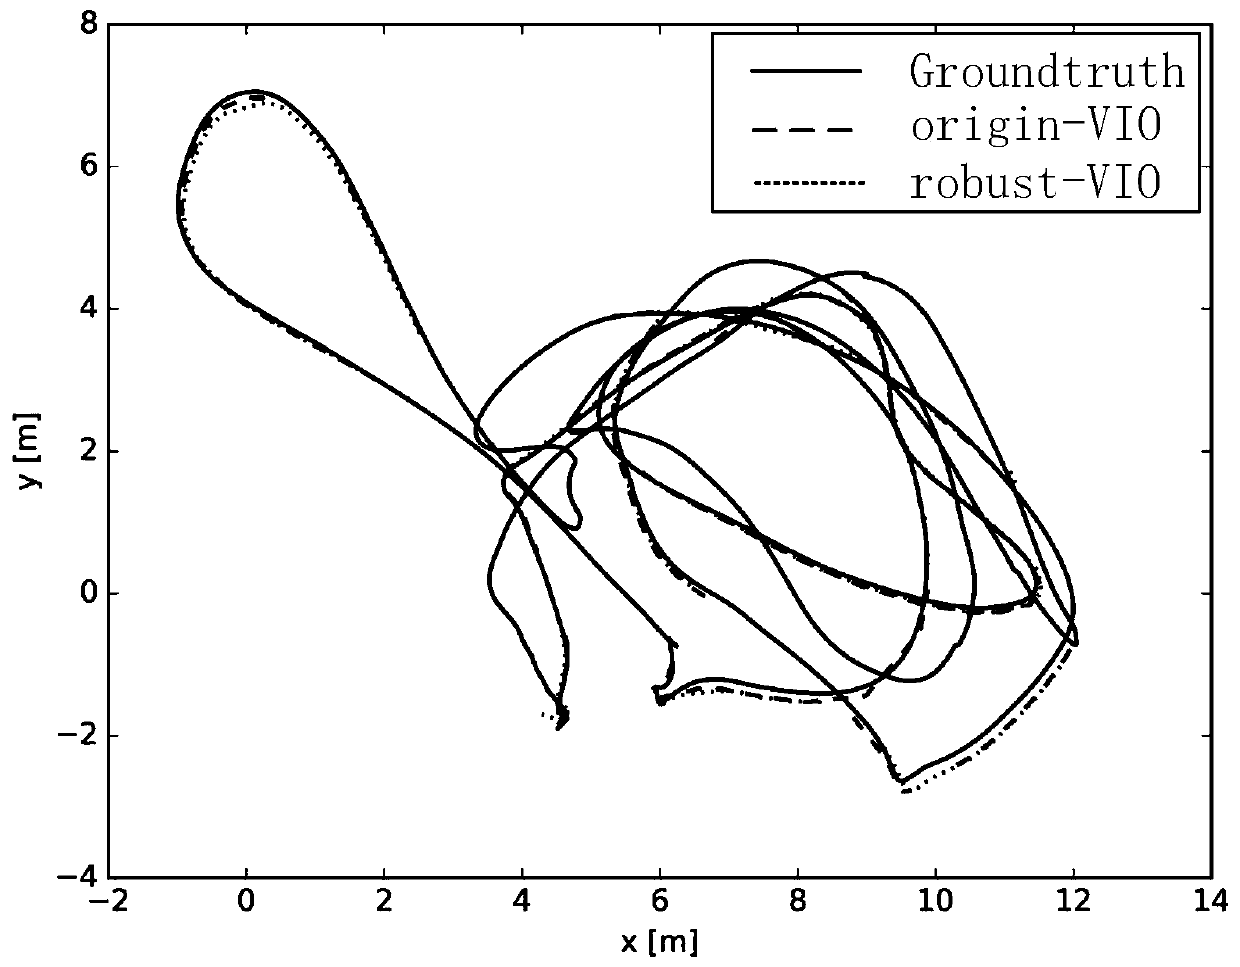 Monocular robustness visual-inertial tight coupling localization method